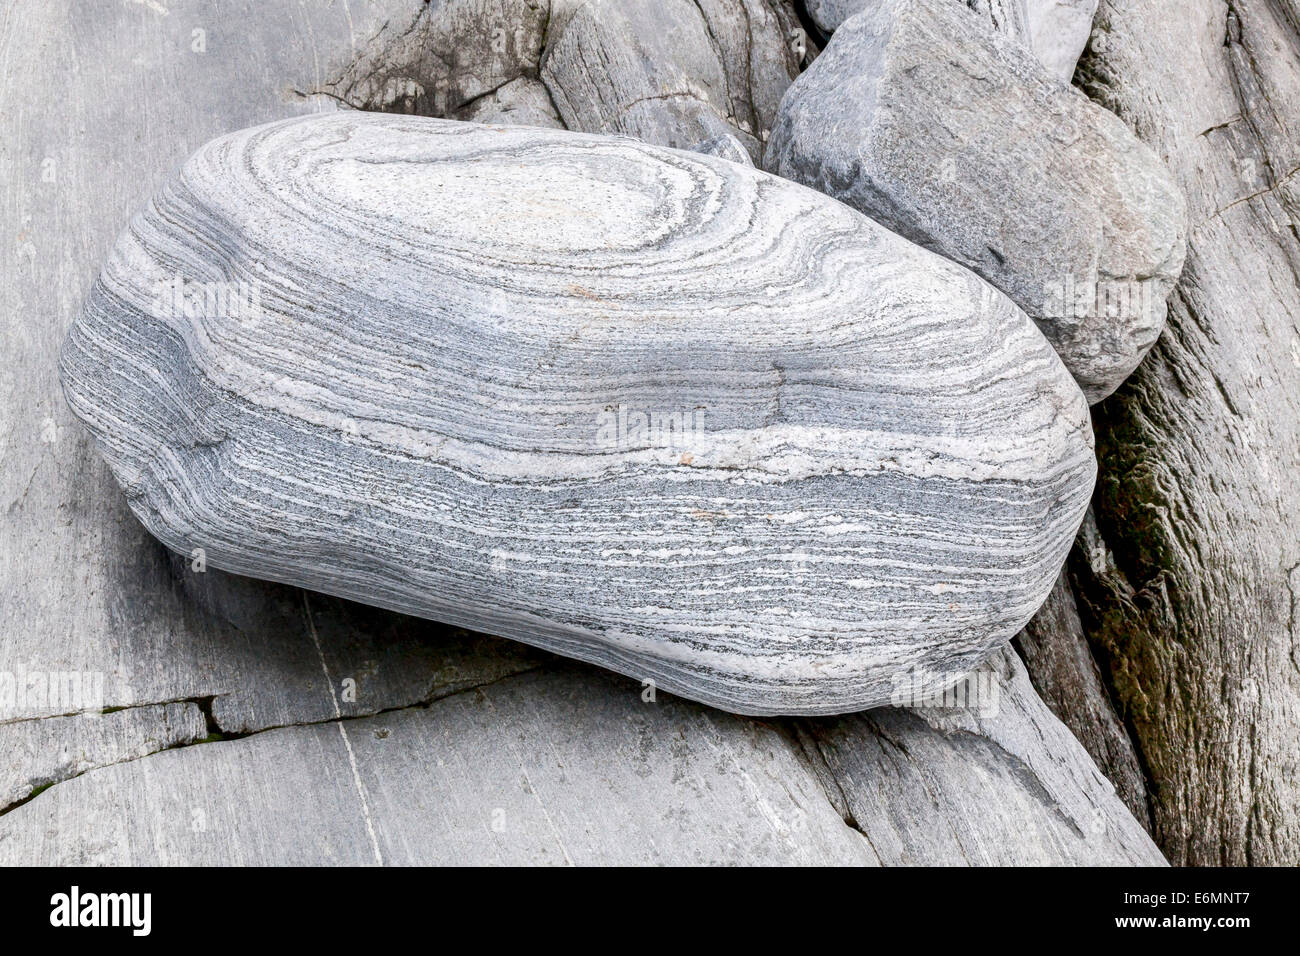 Granit Felsformationen im Fluss Maggia im Maggiatal, Valle Maggia, Ponte Brolla, Kanton Tessin, Schweiz Stockfoto